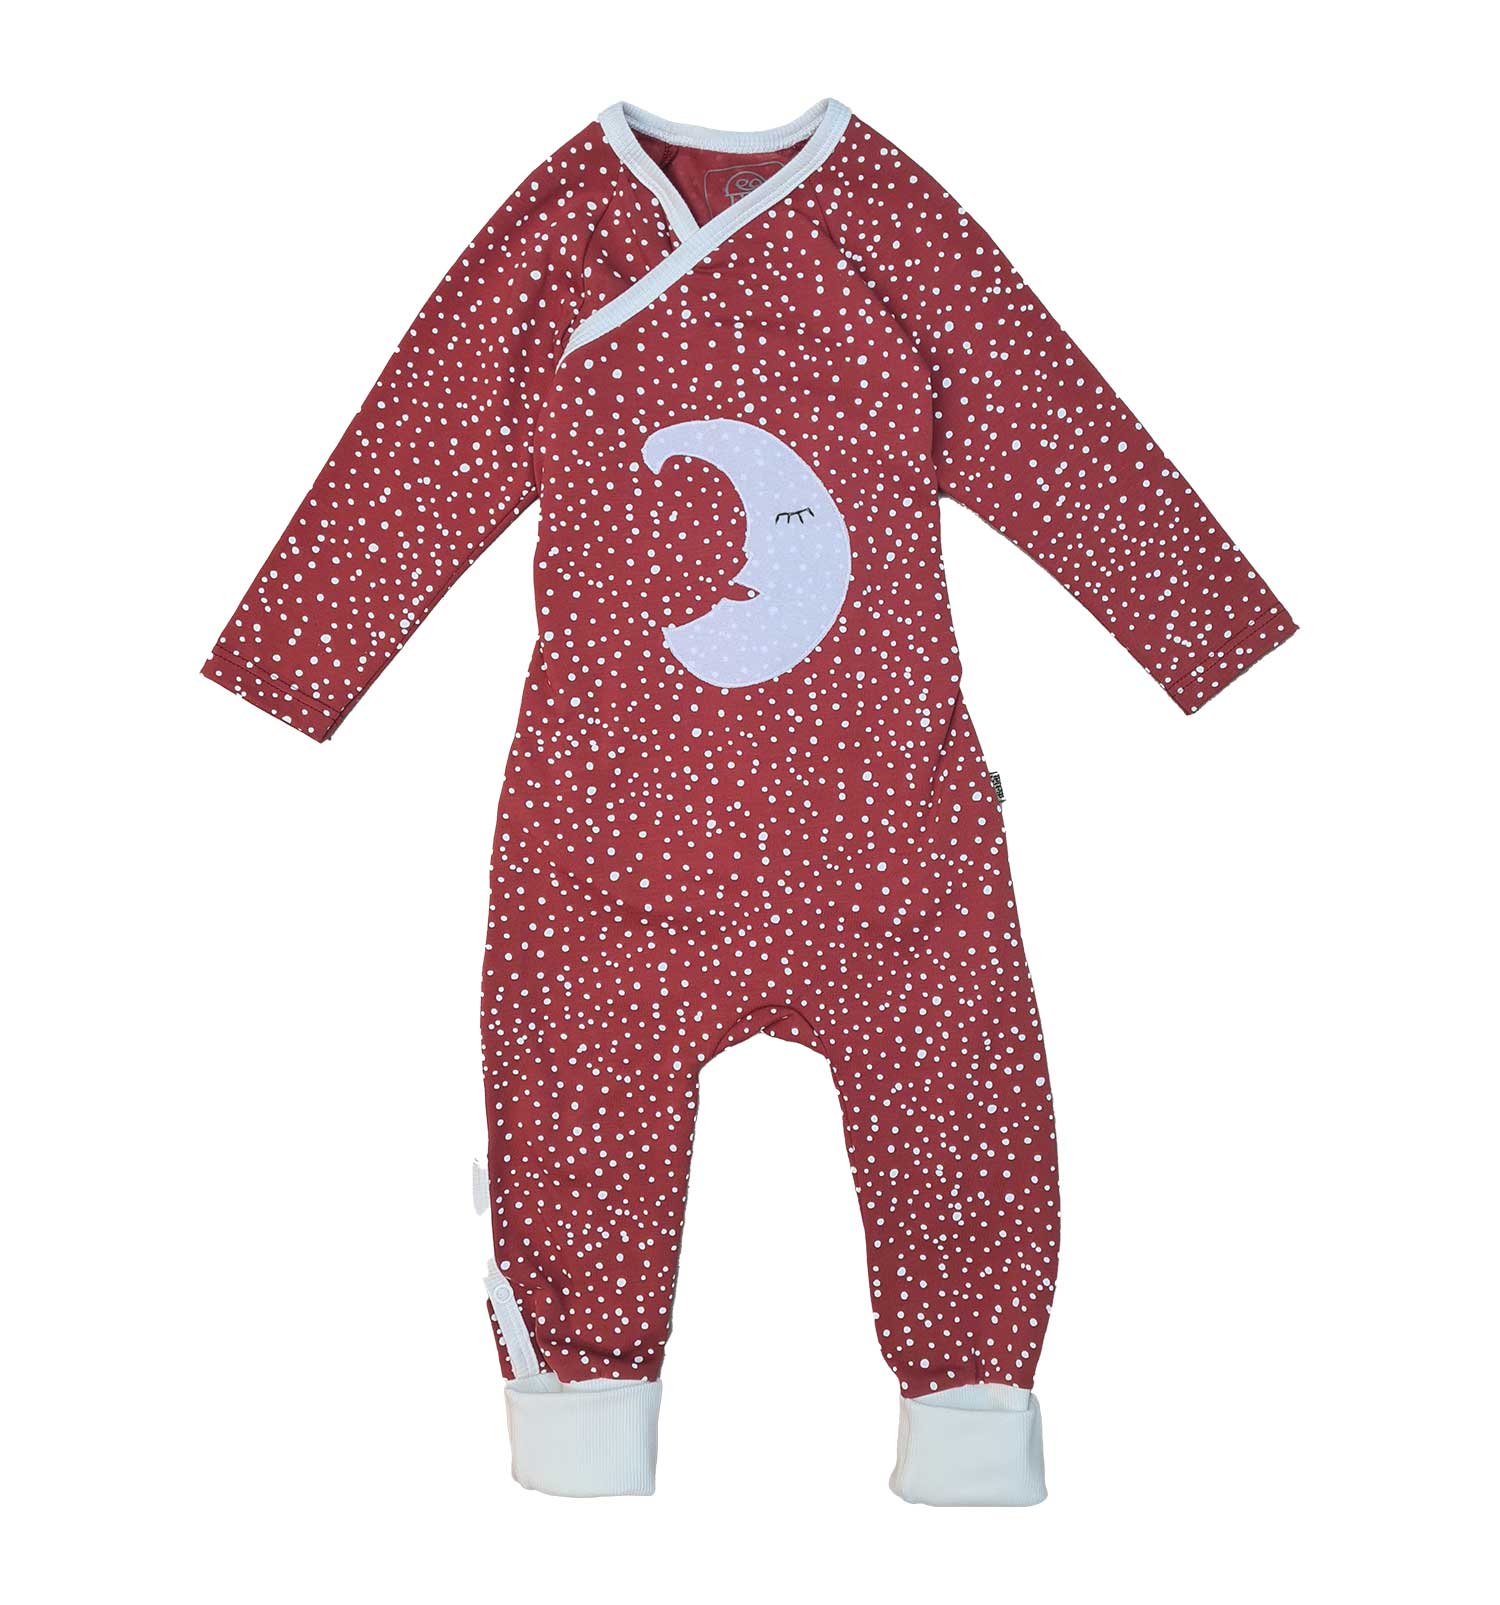 Baby Wickelstrampler Schlafanzug aus Biobaumwolle in rot